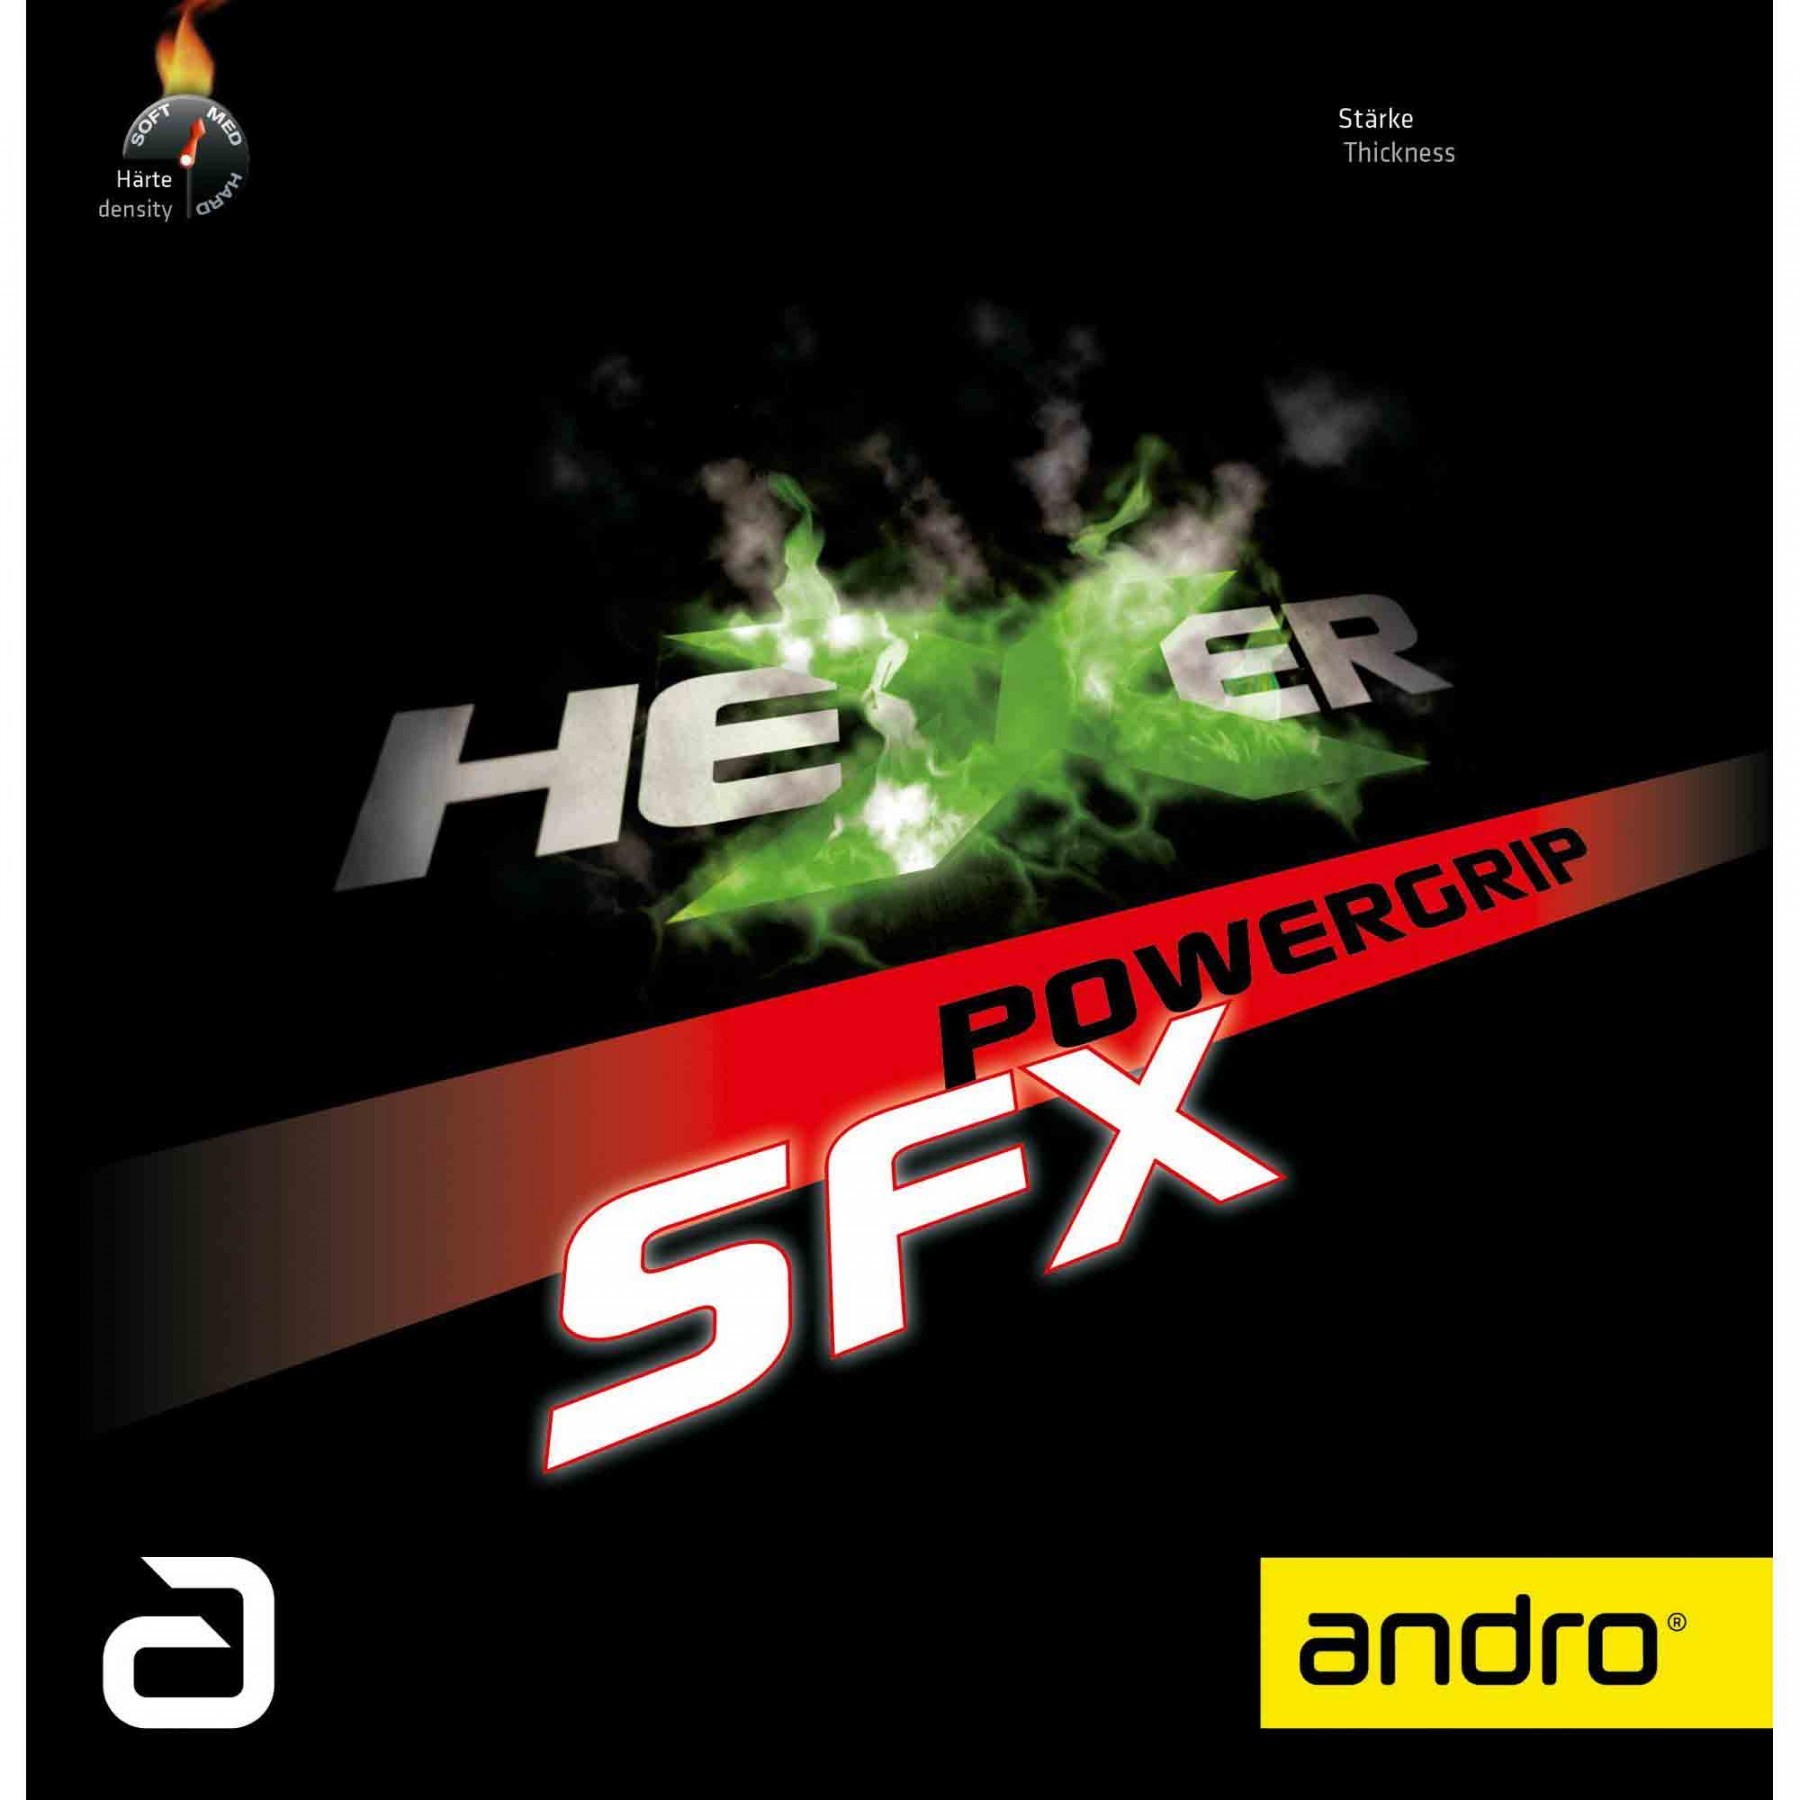 Tischtennisbelag NEU /zum Sonderpreis Andro Hexer Powergrip SFX 